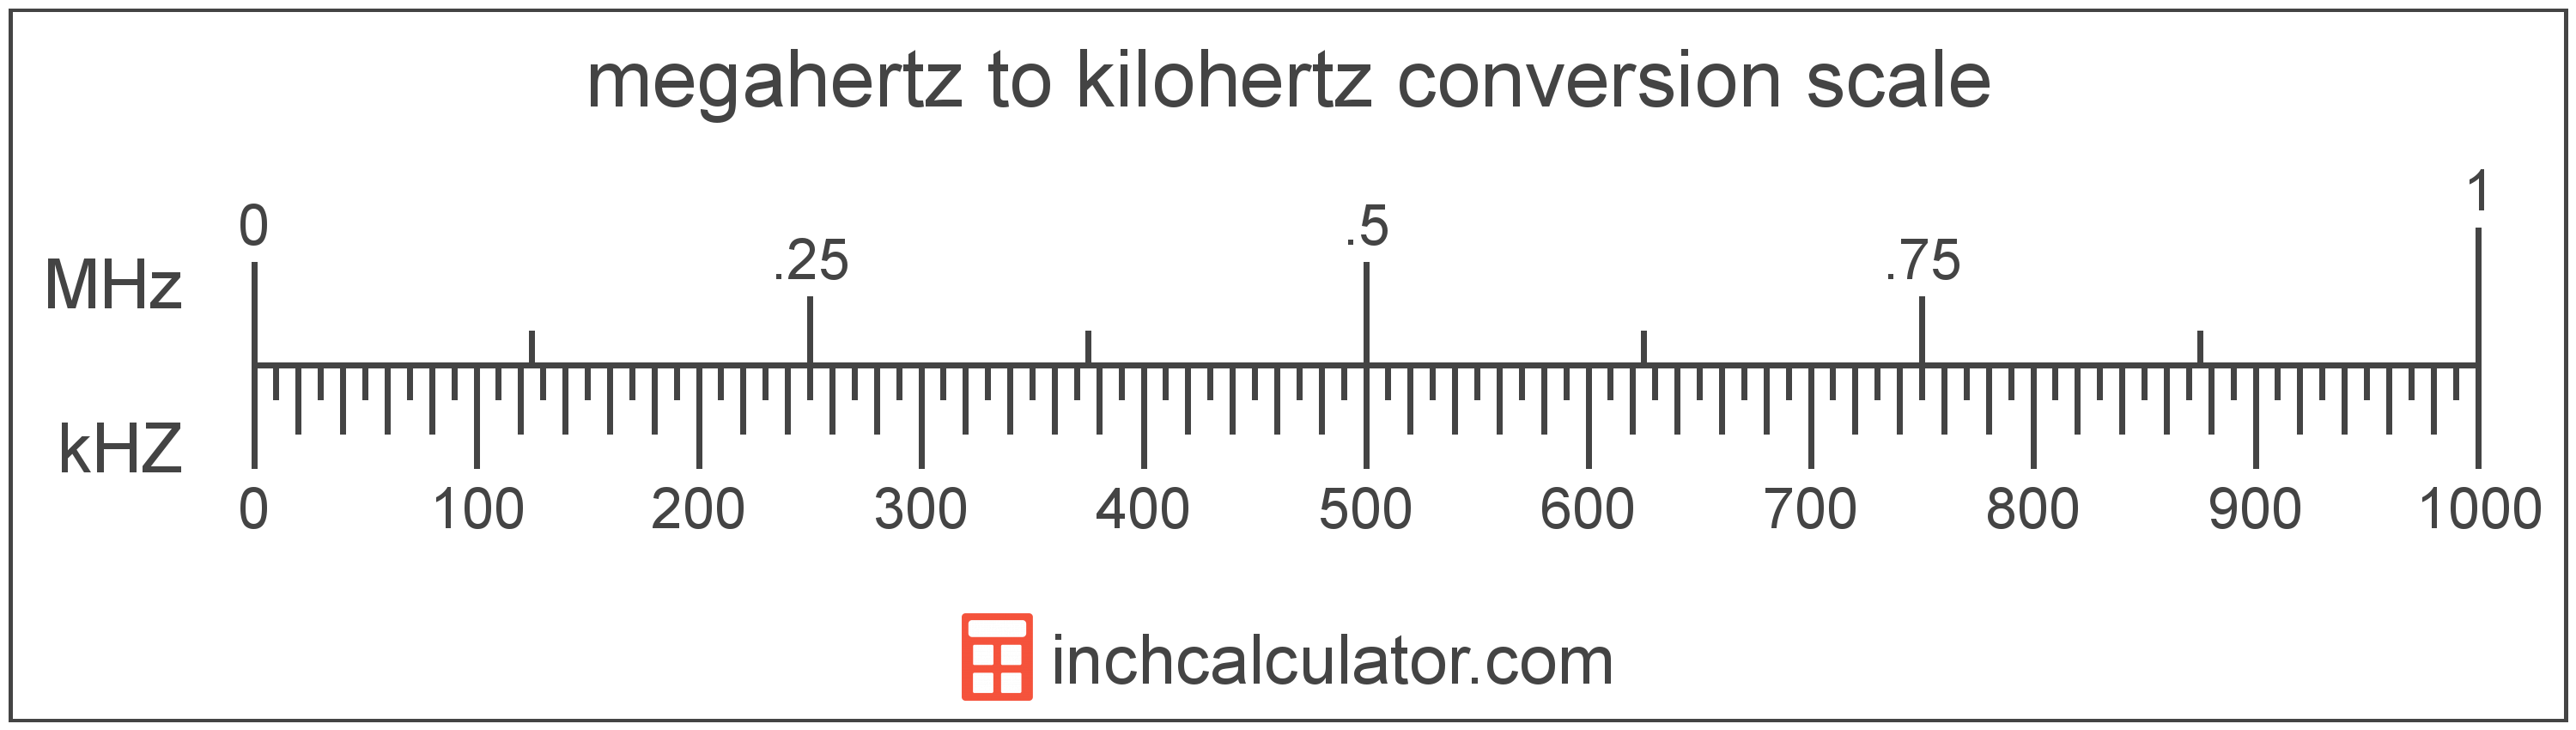 conversion scale showing kilohertz and equivalent megahertz frequency values